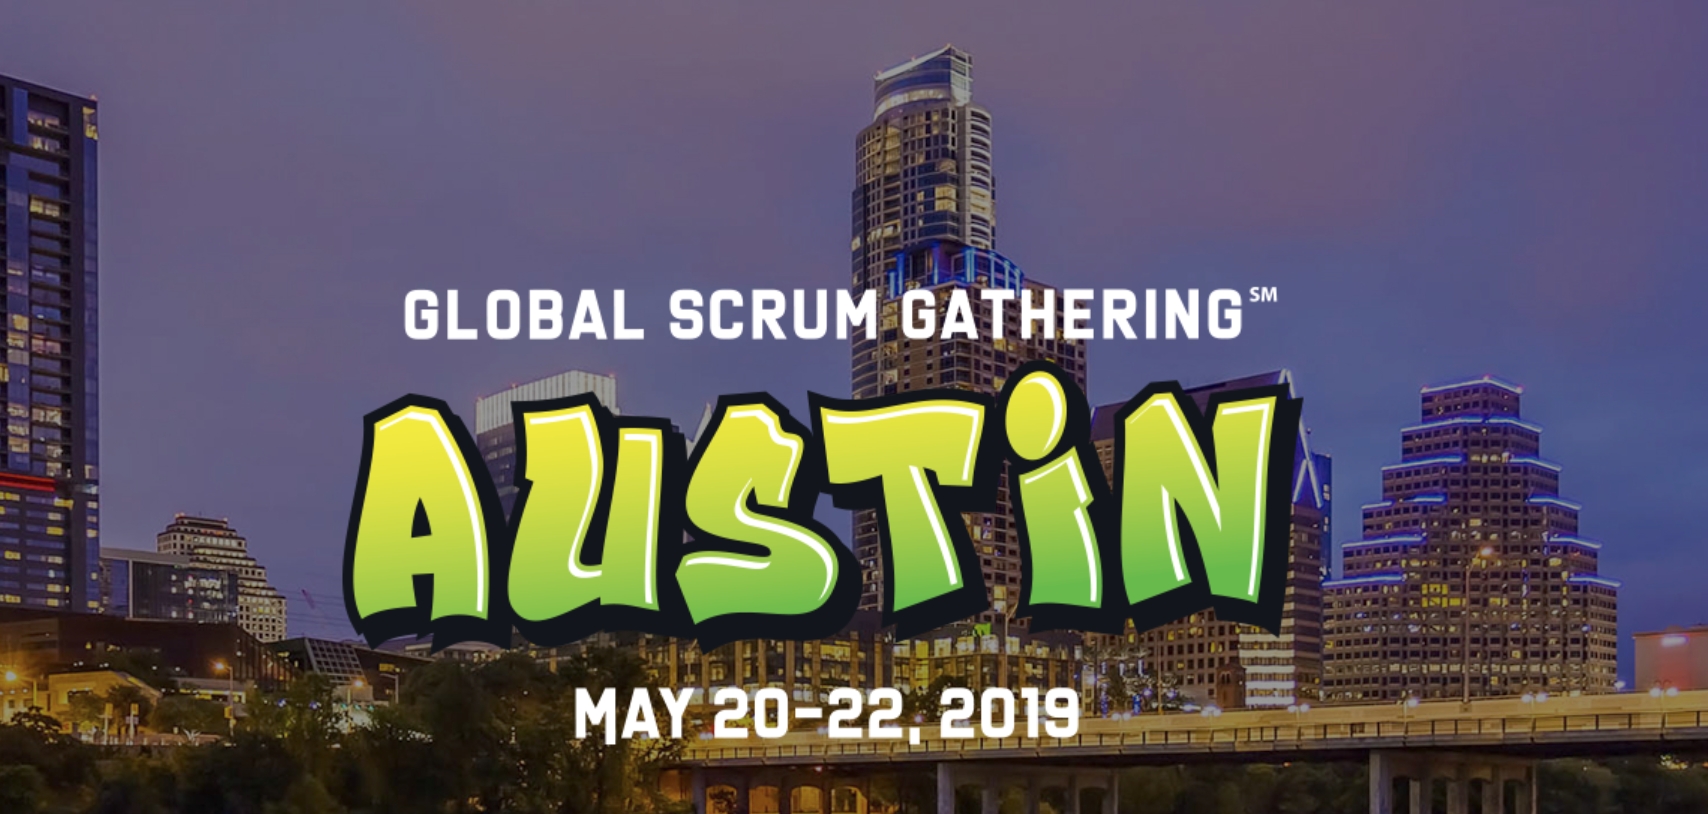 Global Scrum Gathering in Austin